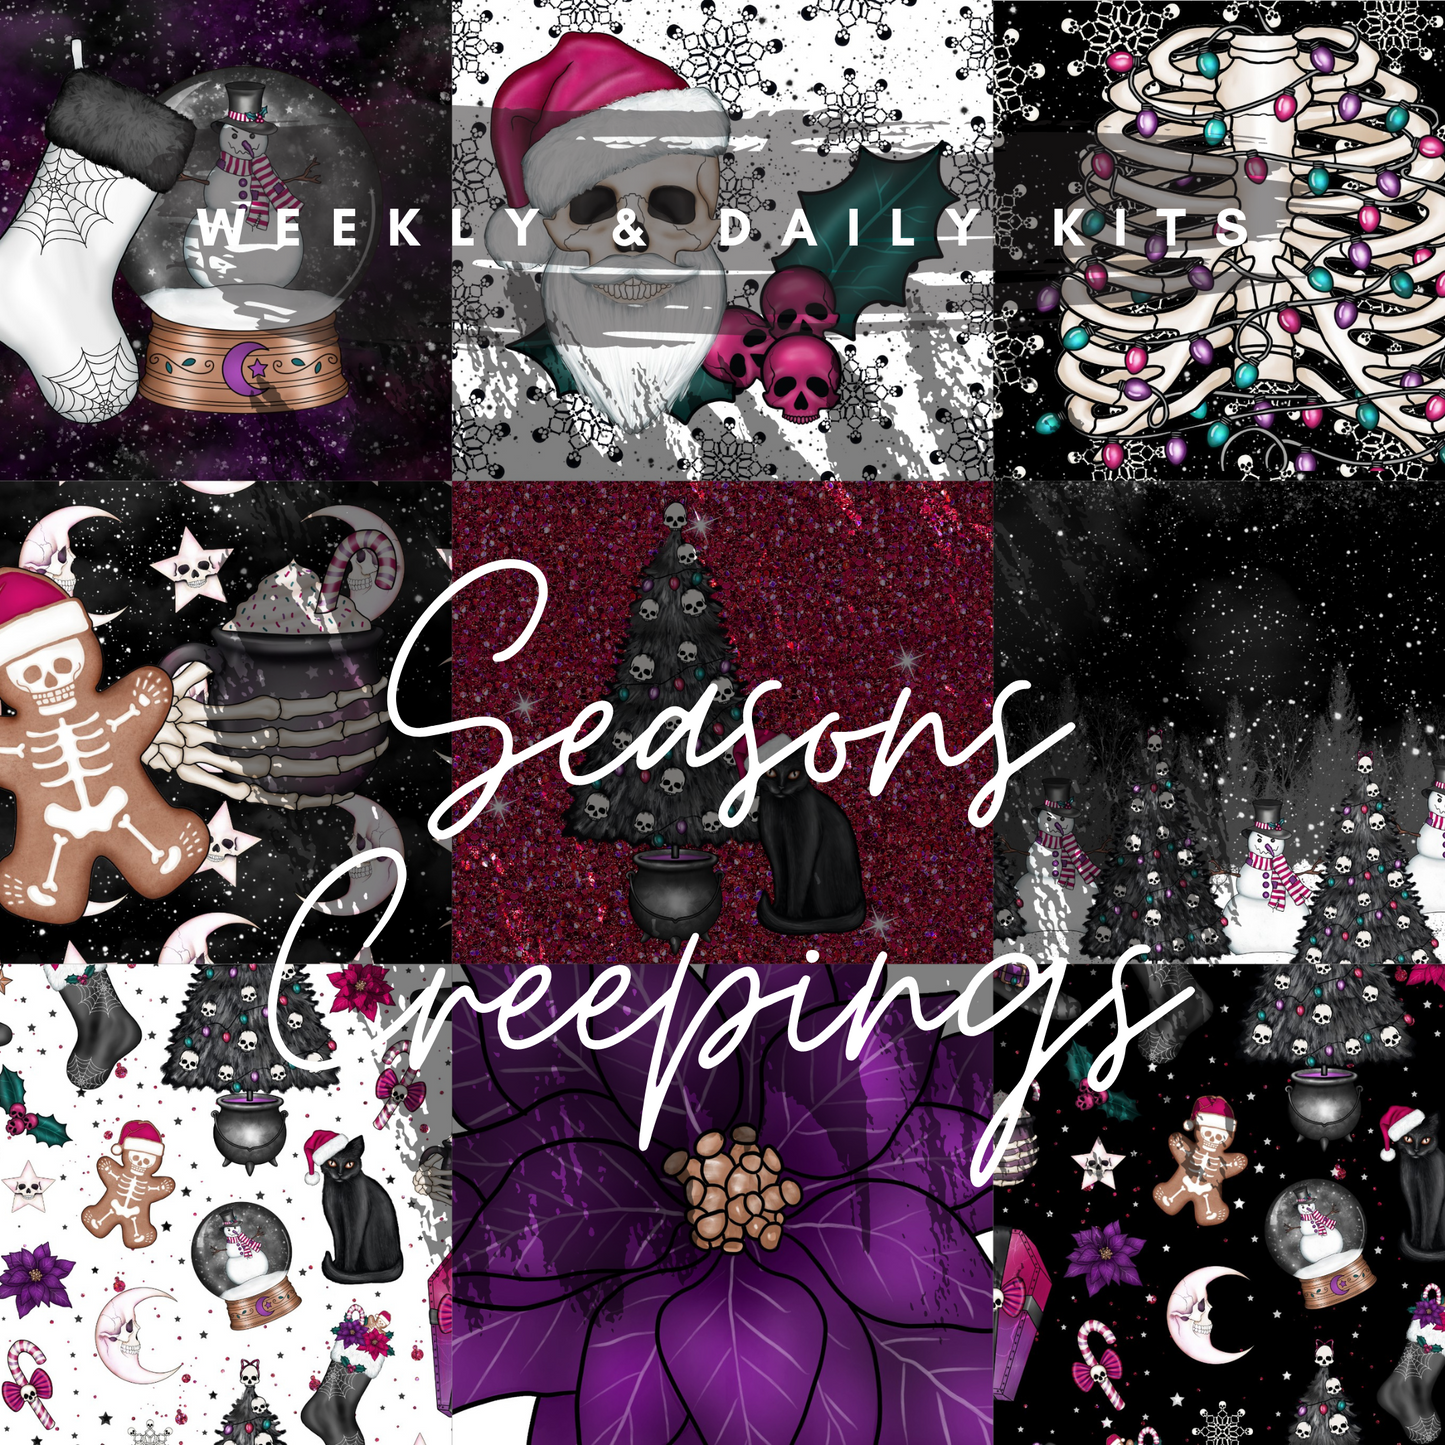 Daily & Weekly Kit / Seasons Creepings